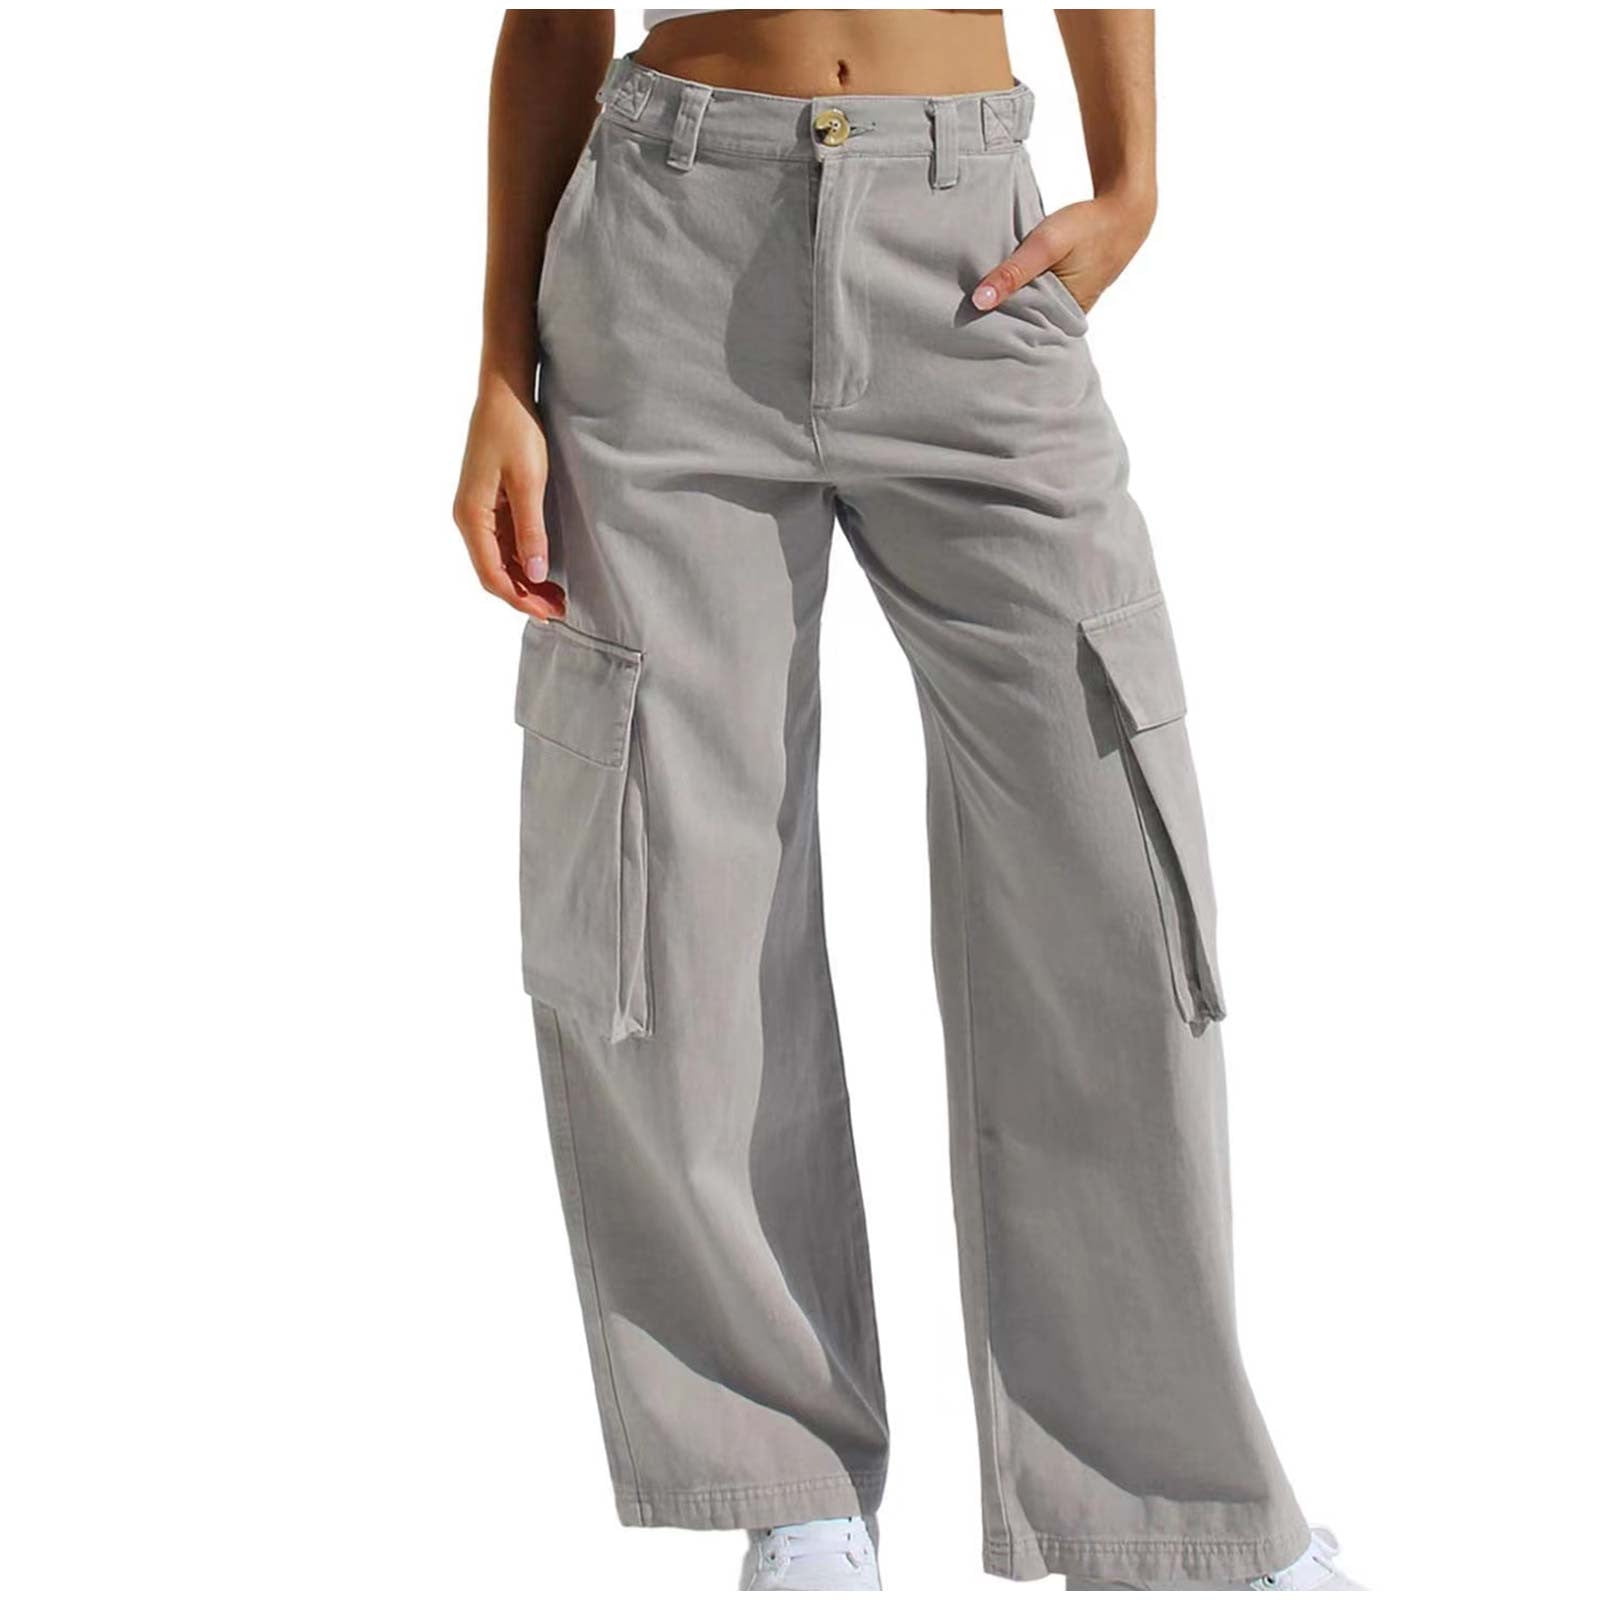 XFLWAM Women s High Waisted Cargo Baggy Jeans Flap Pocket Side Denim Pants Straight Leg Streetwear Trousers with Big Pockets Gray S f3341d3a d17e 47dc a5cd 30e95b9198da.0879079abd00e01a580e76644fd1c713